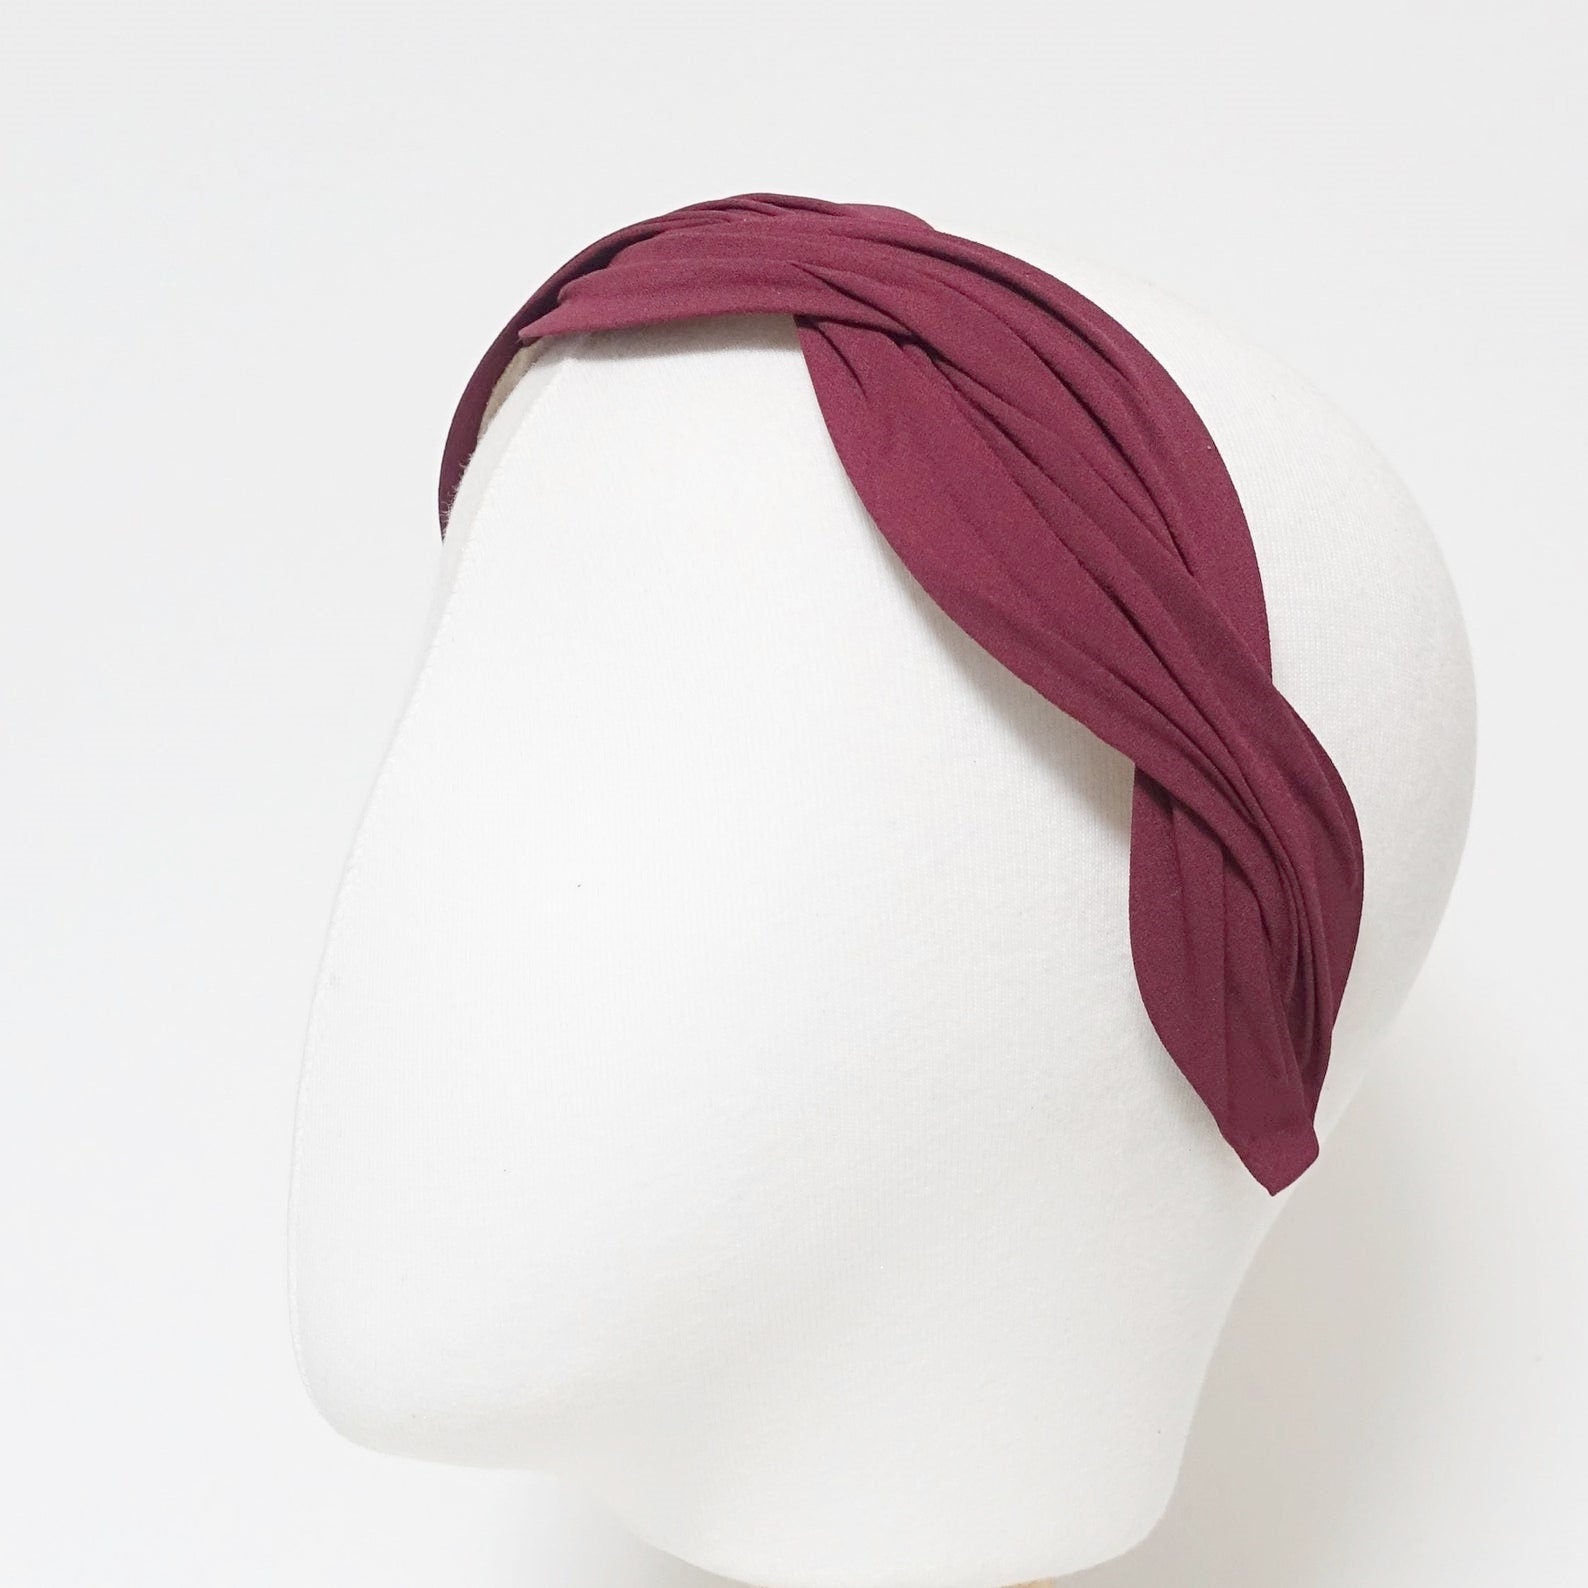 veryshine.com hairband/headband Red wine chiffon wave headband stylish woman hairband